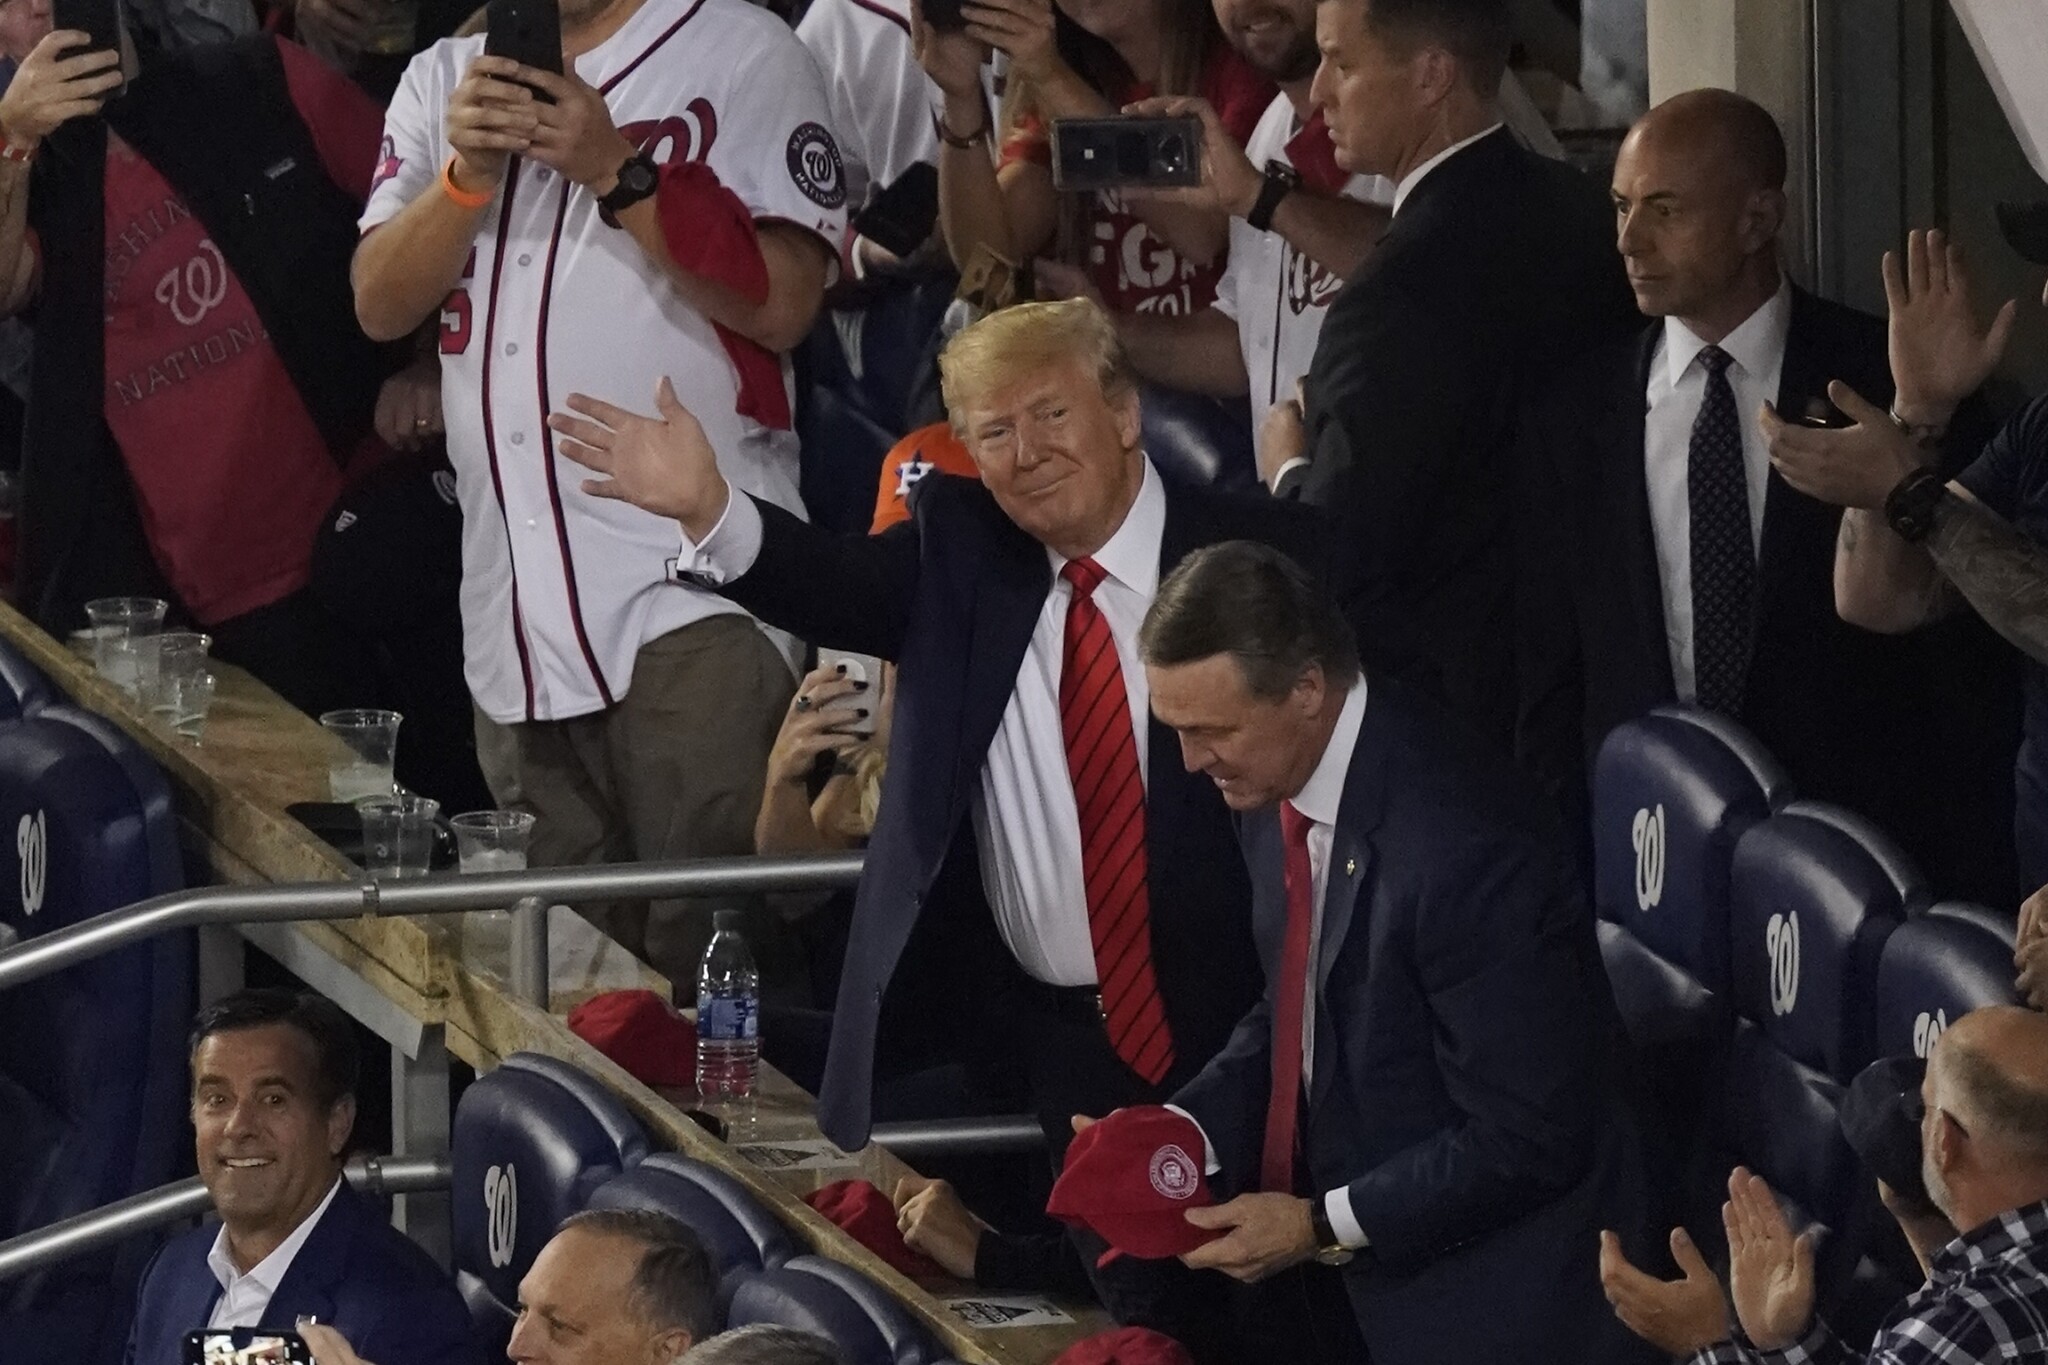 At World Series, fans boo Trump, chant 'Lock him up!